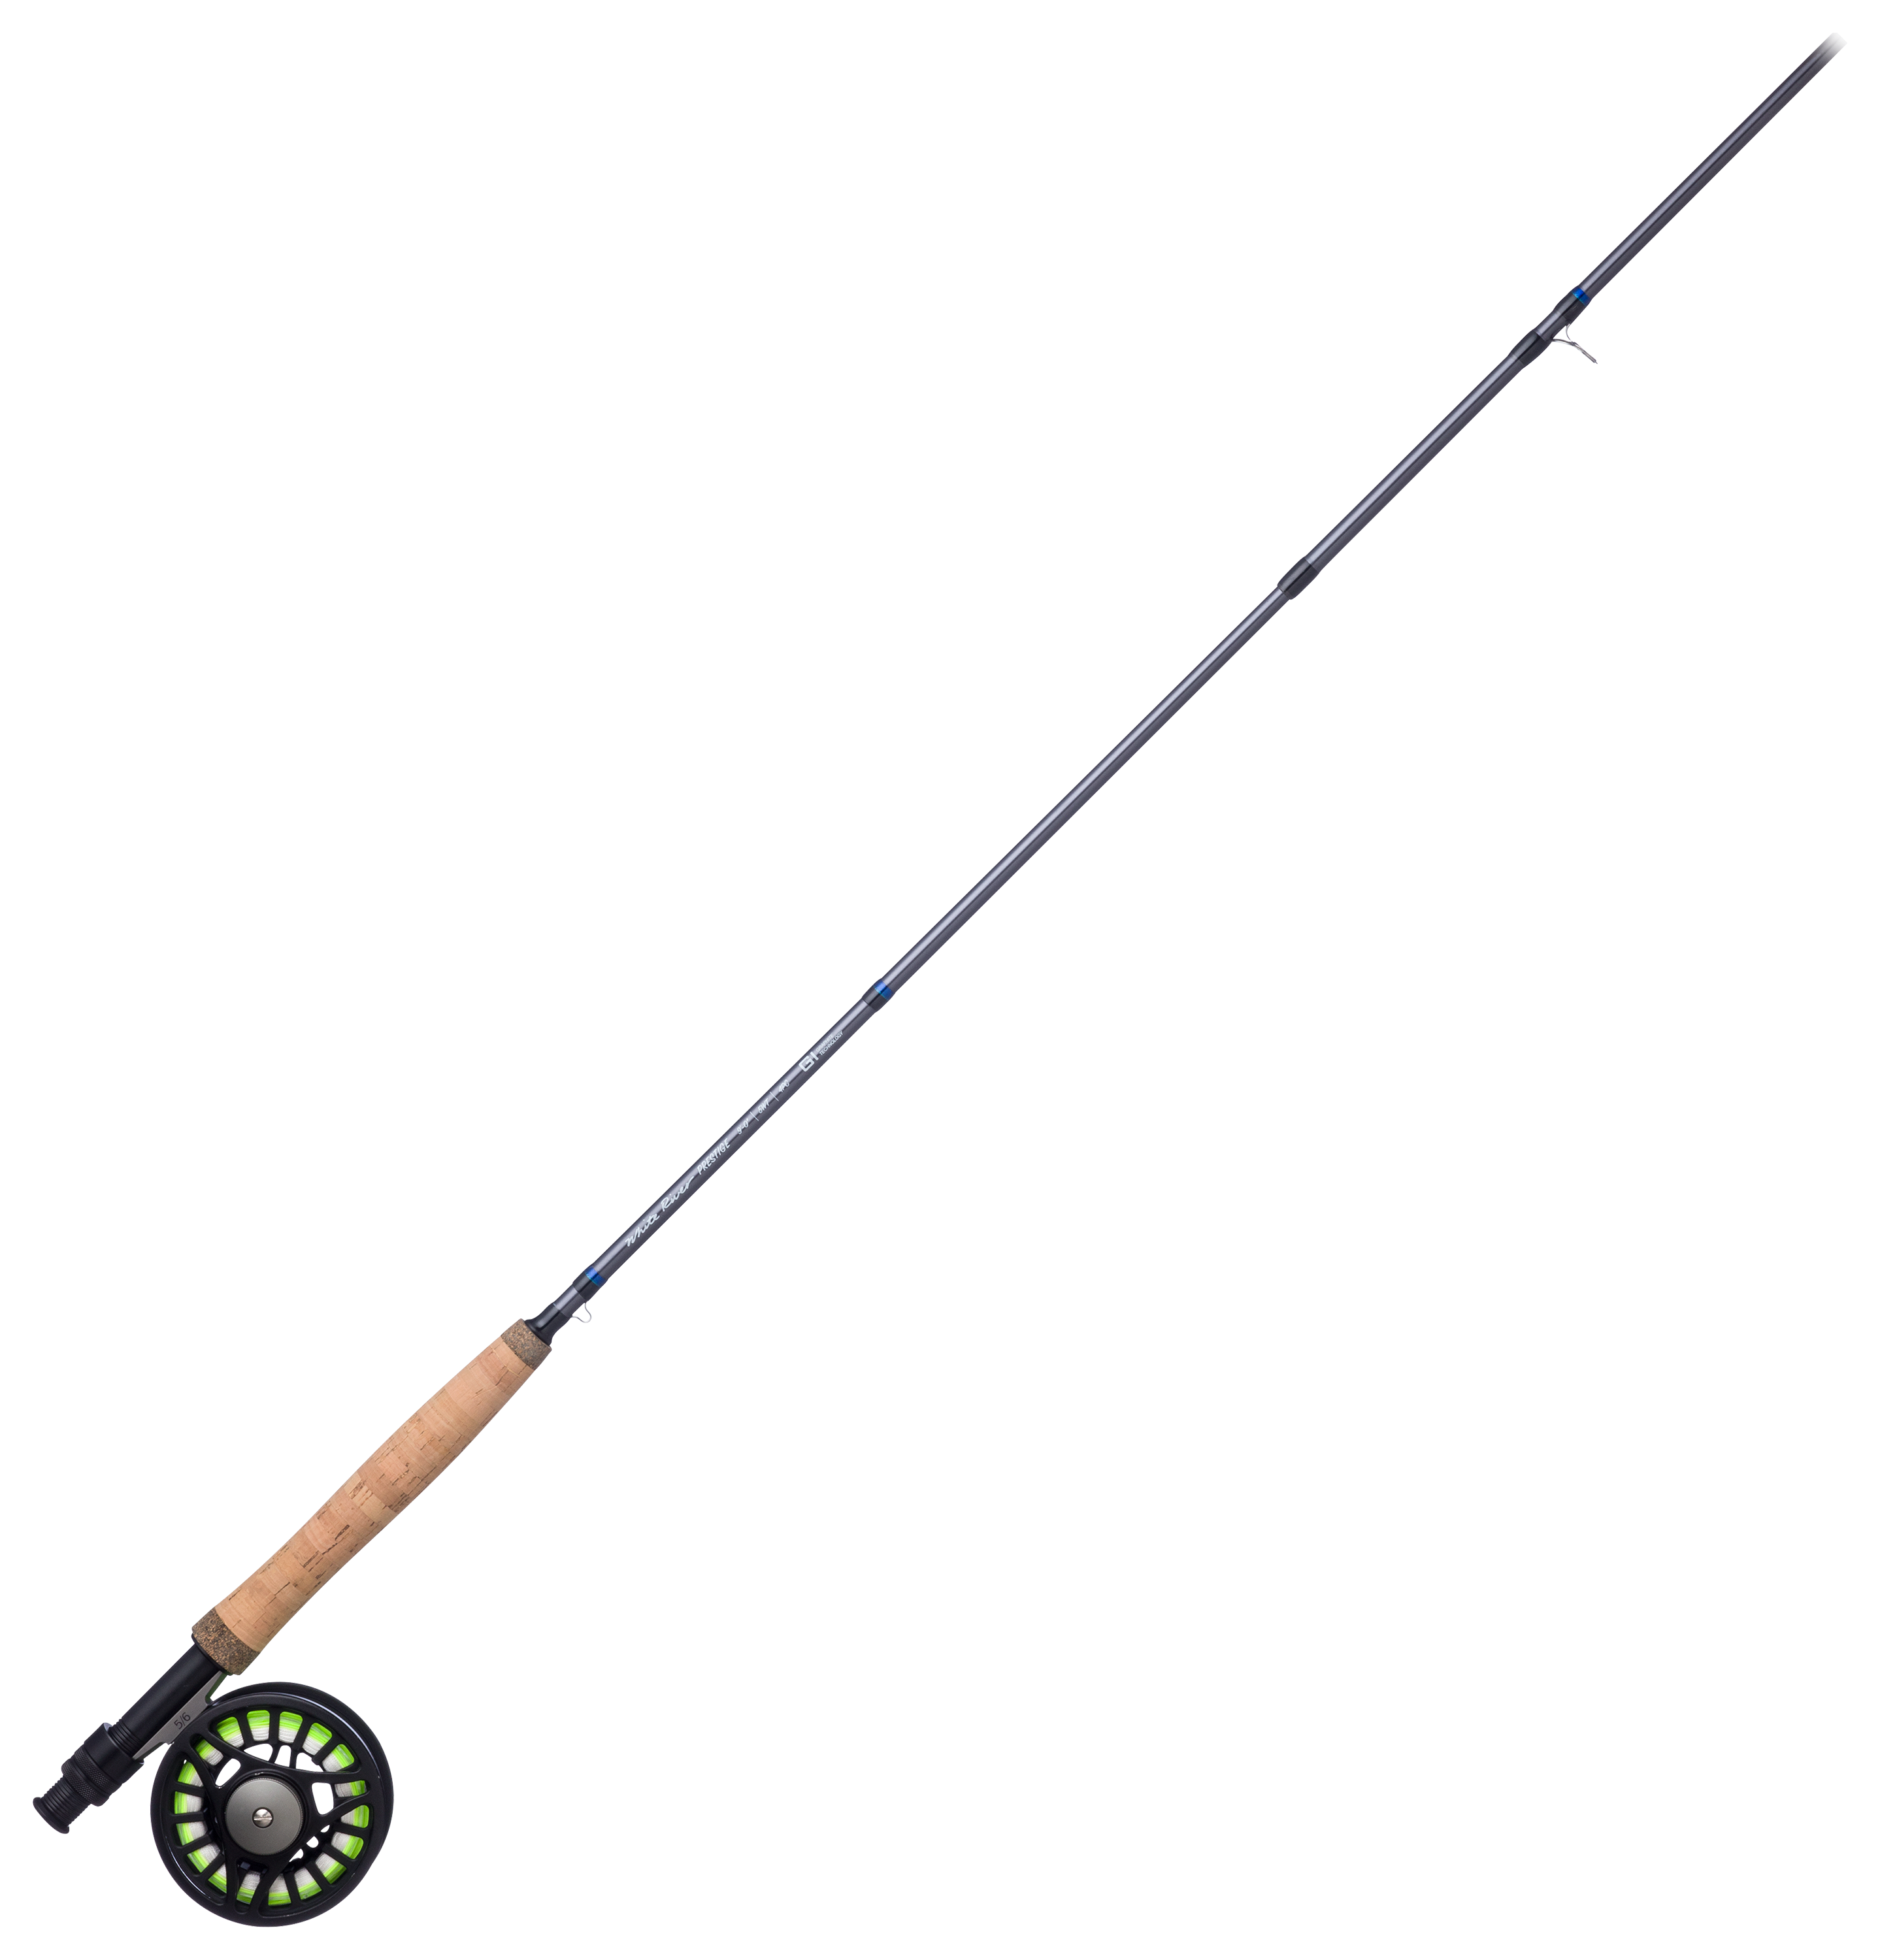 Cheeky Tyro Fly Fishing Reel - Black/Gold 9003 850962006394